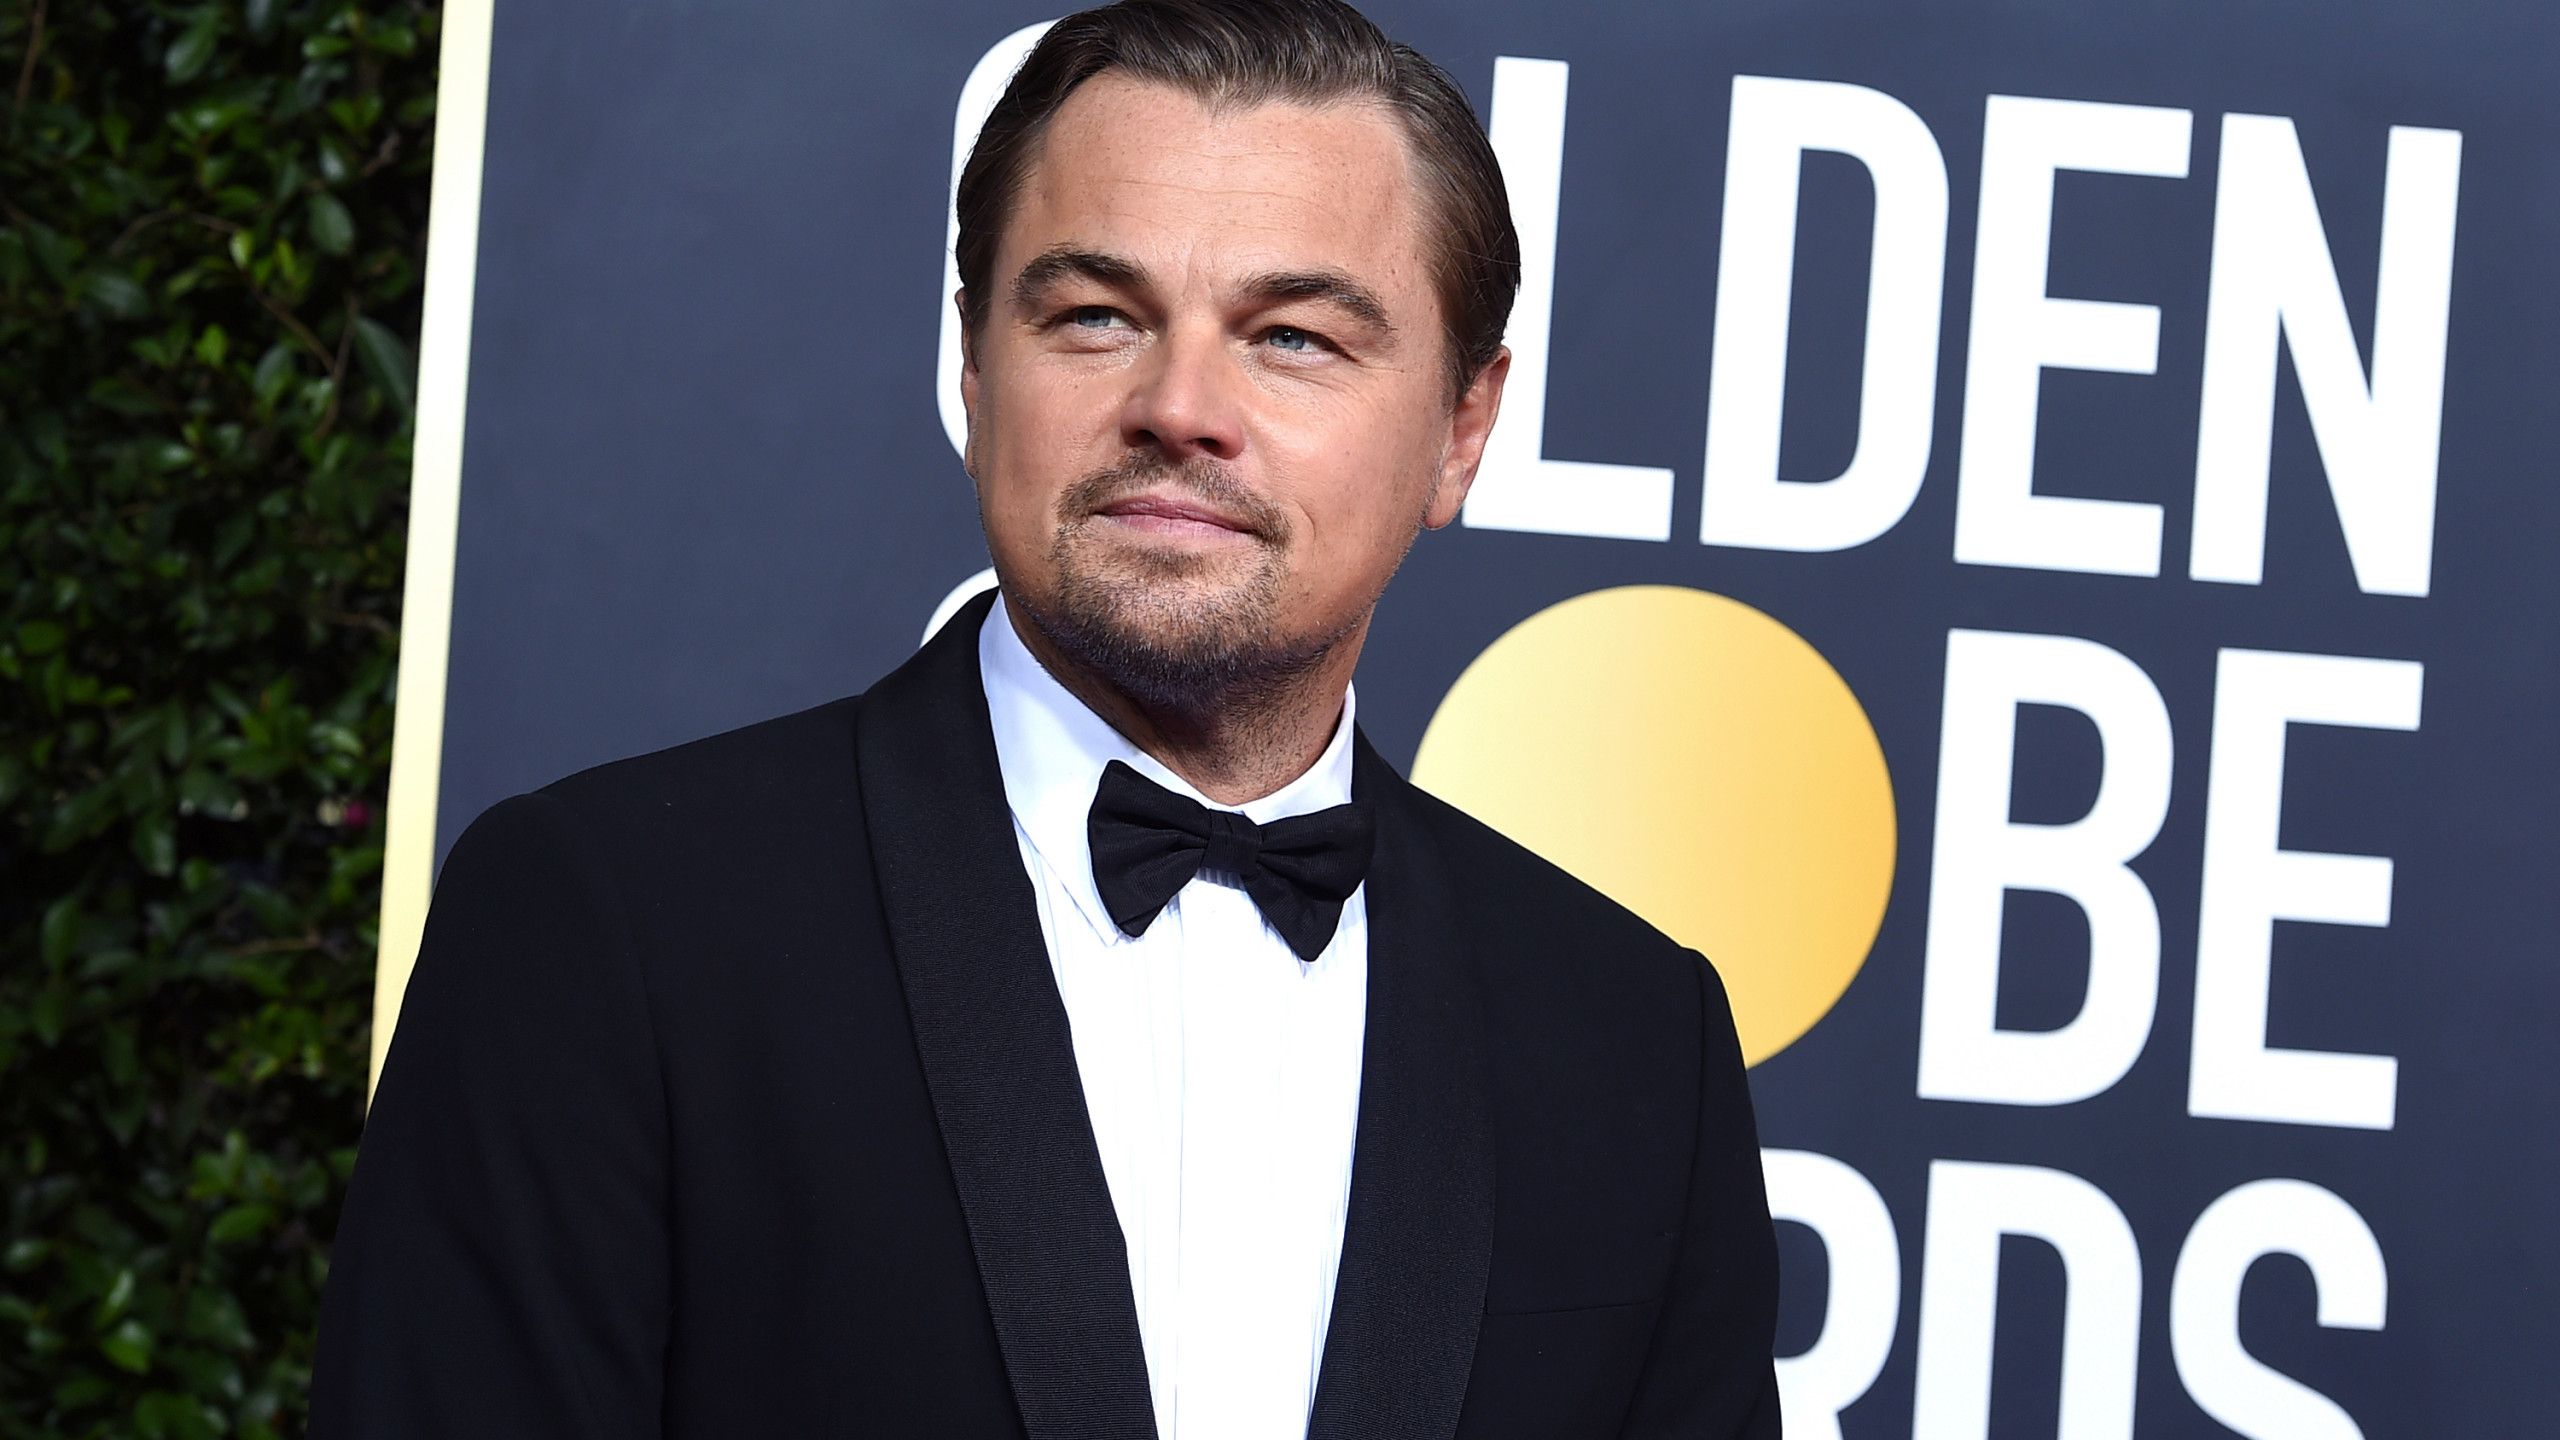 Leonardo DiCaprio's foundation donating $3 million to Australia